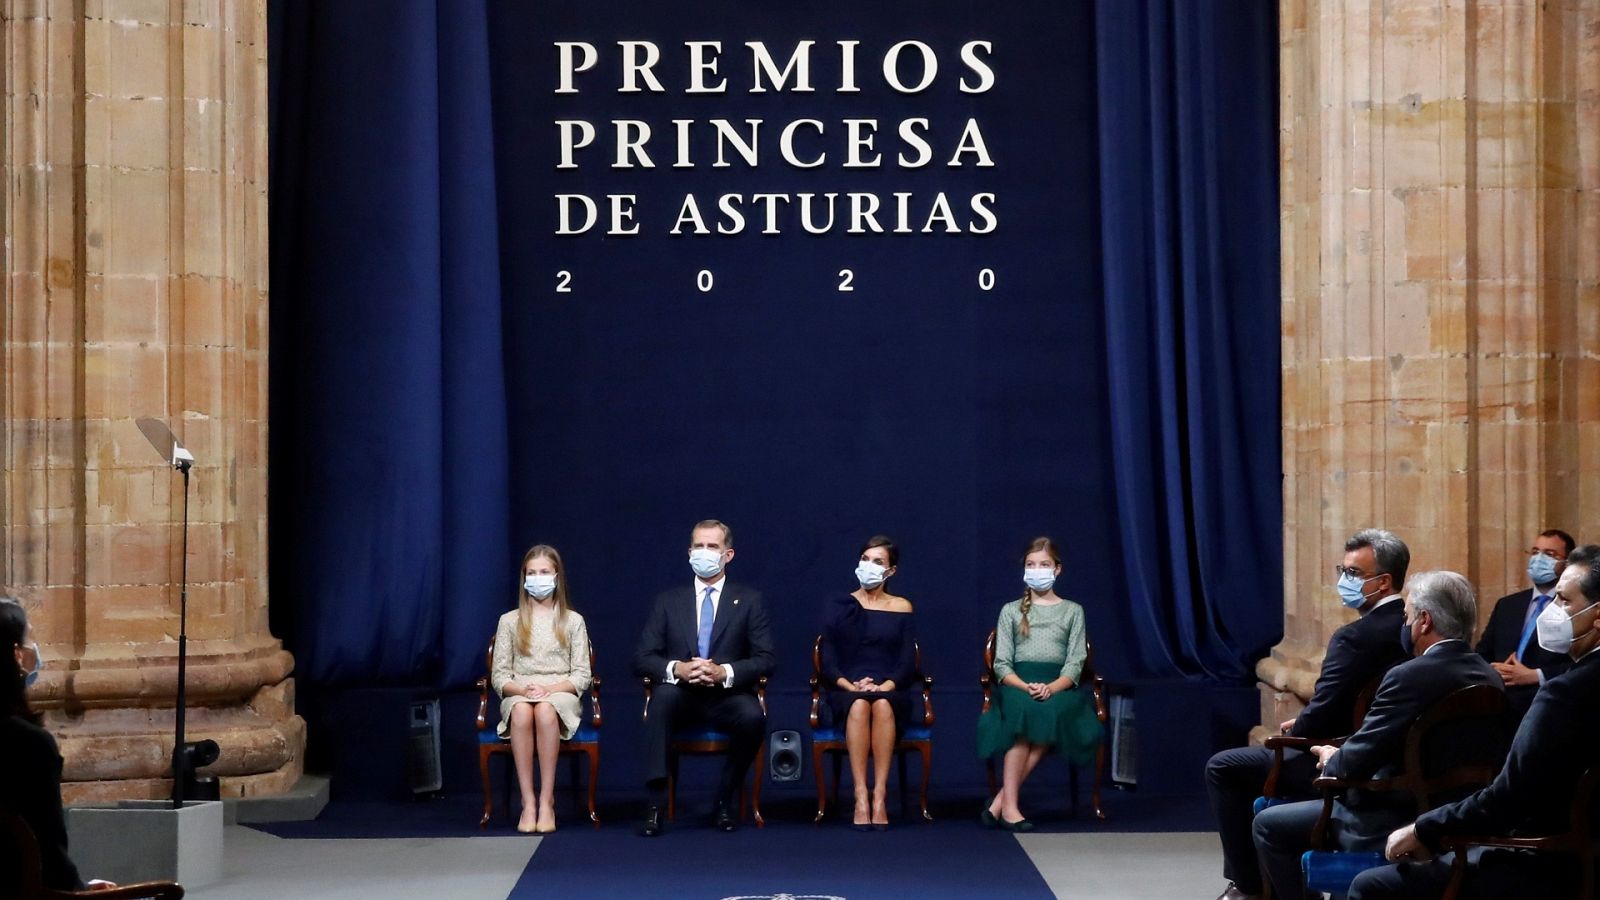 Premios Princesa de Asturias 2020 - RTVE.es